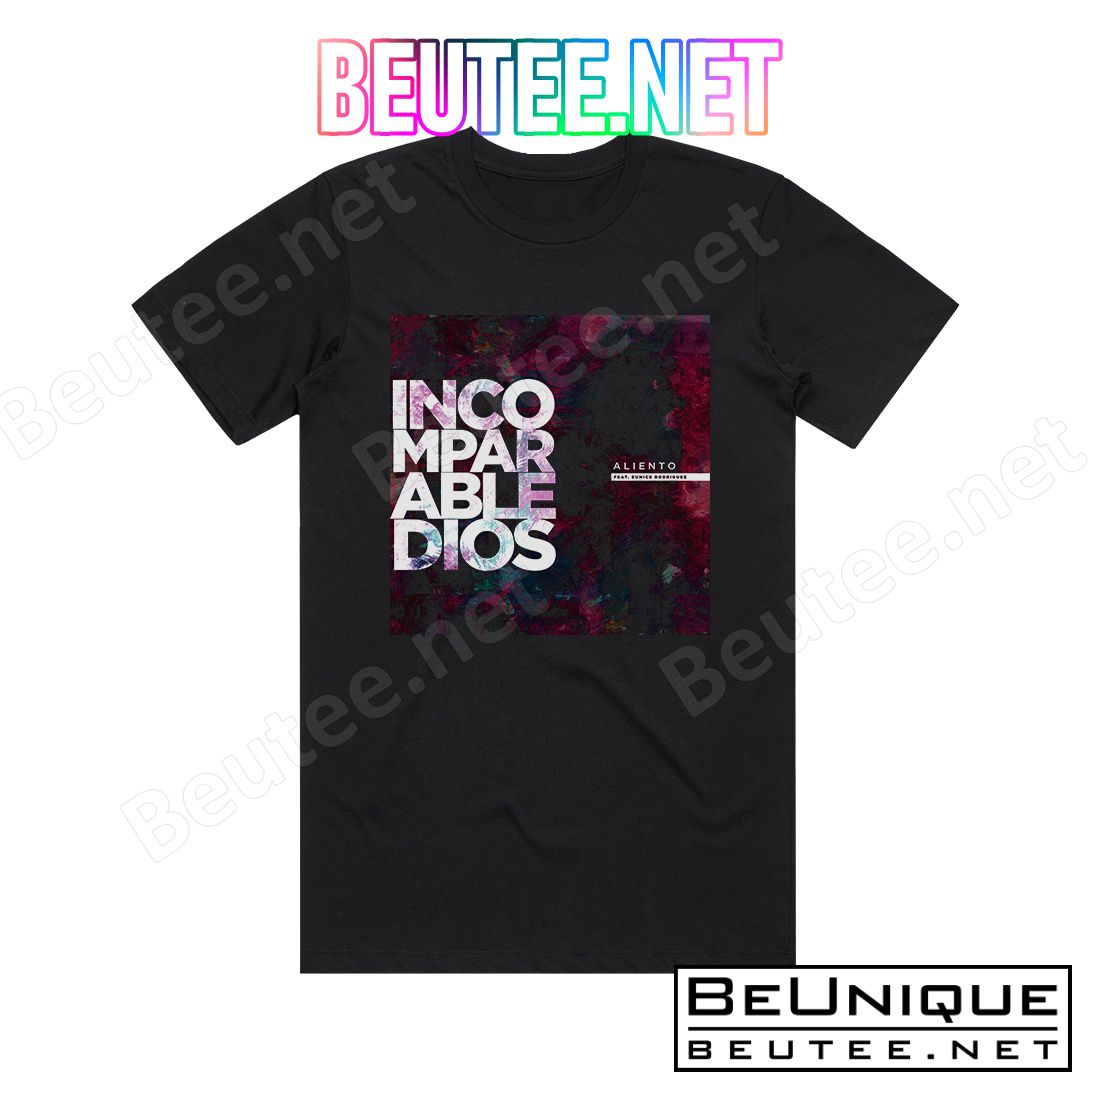 Aliento Incomparable Dios Album Cover T-Shirt